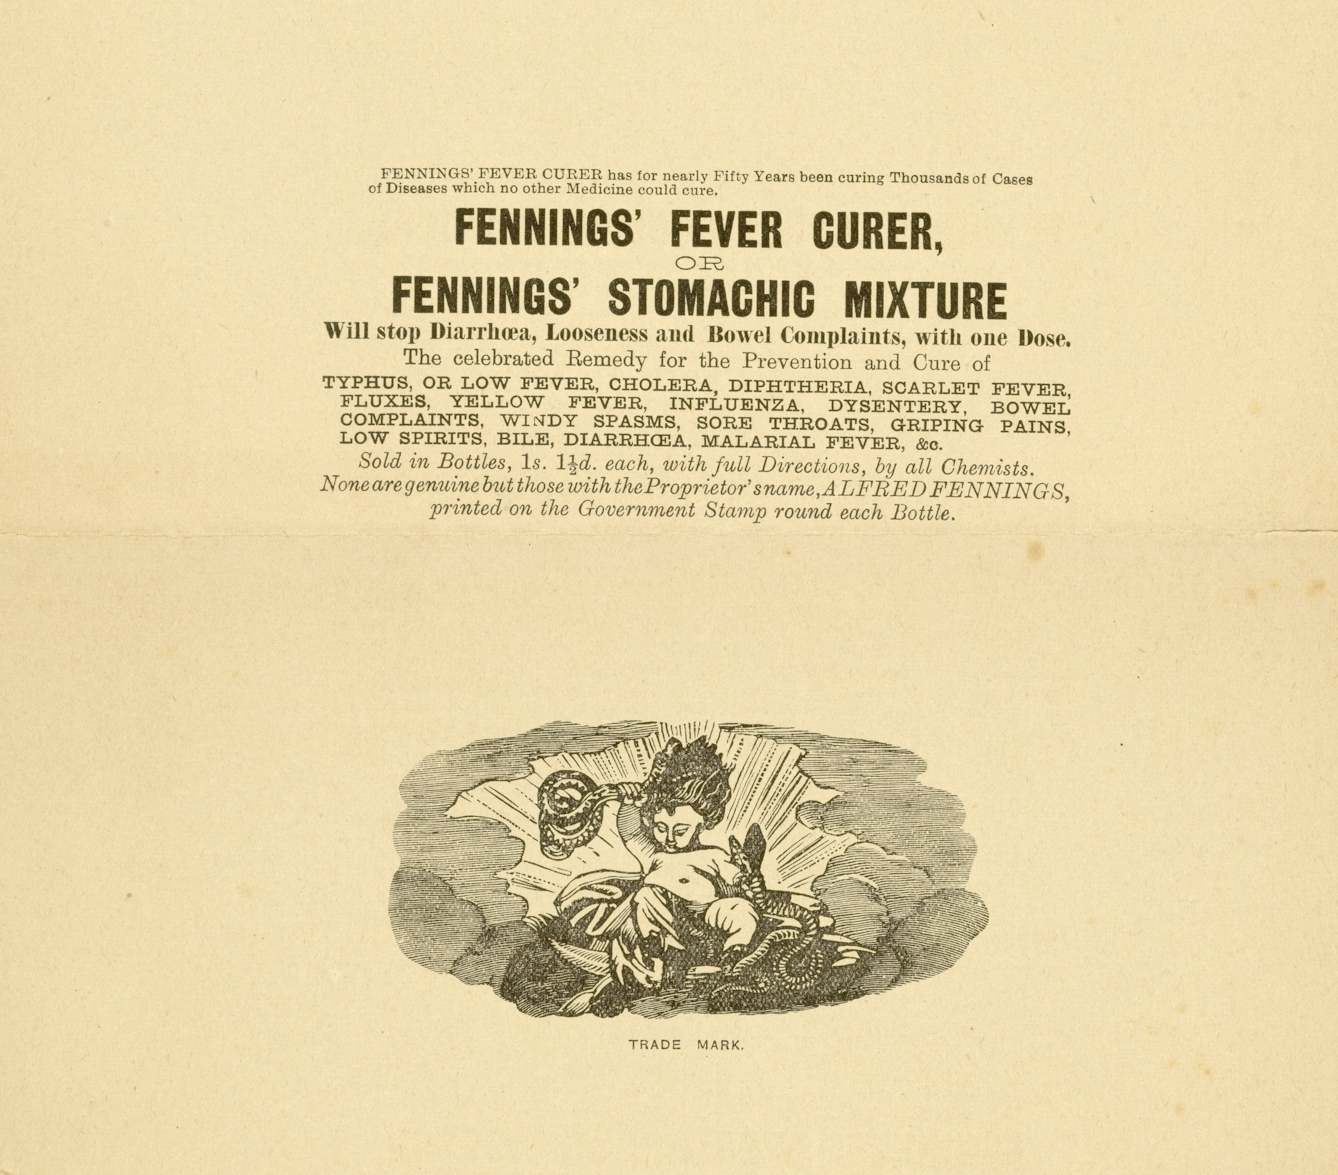 Advert for Fennings' Fever Curer